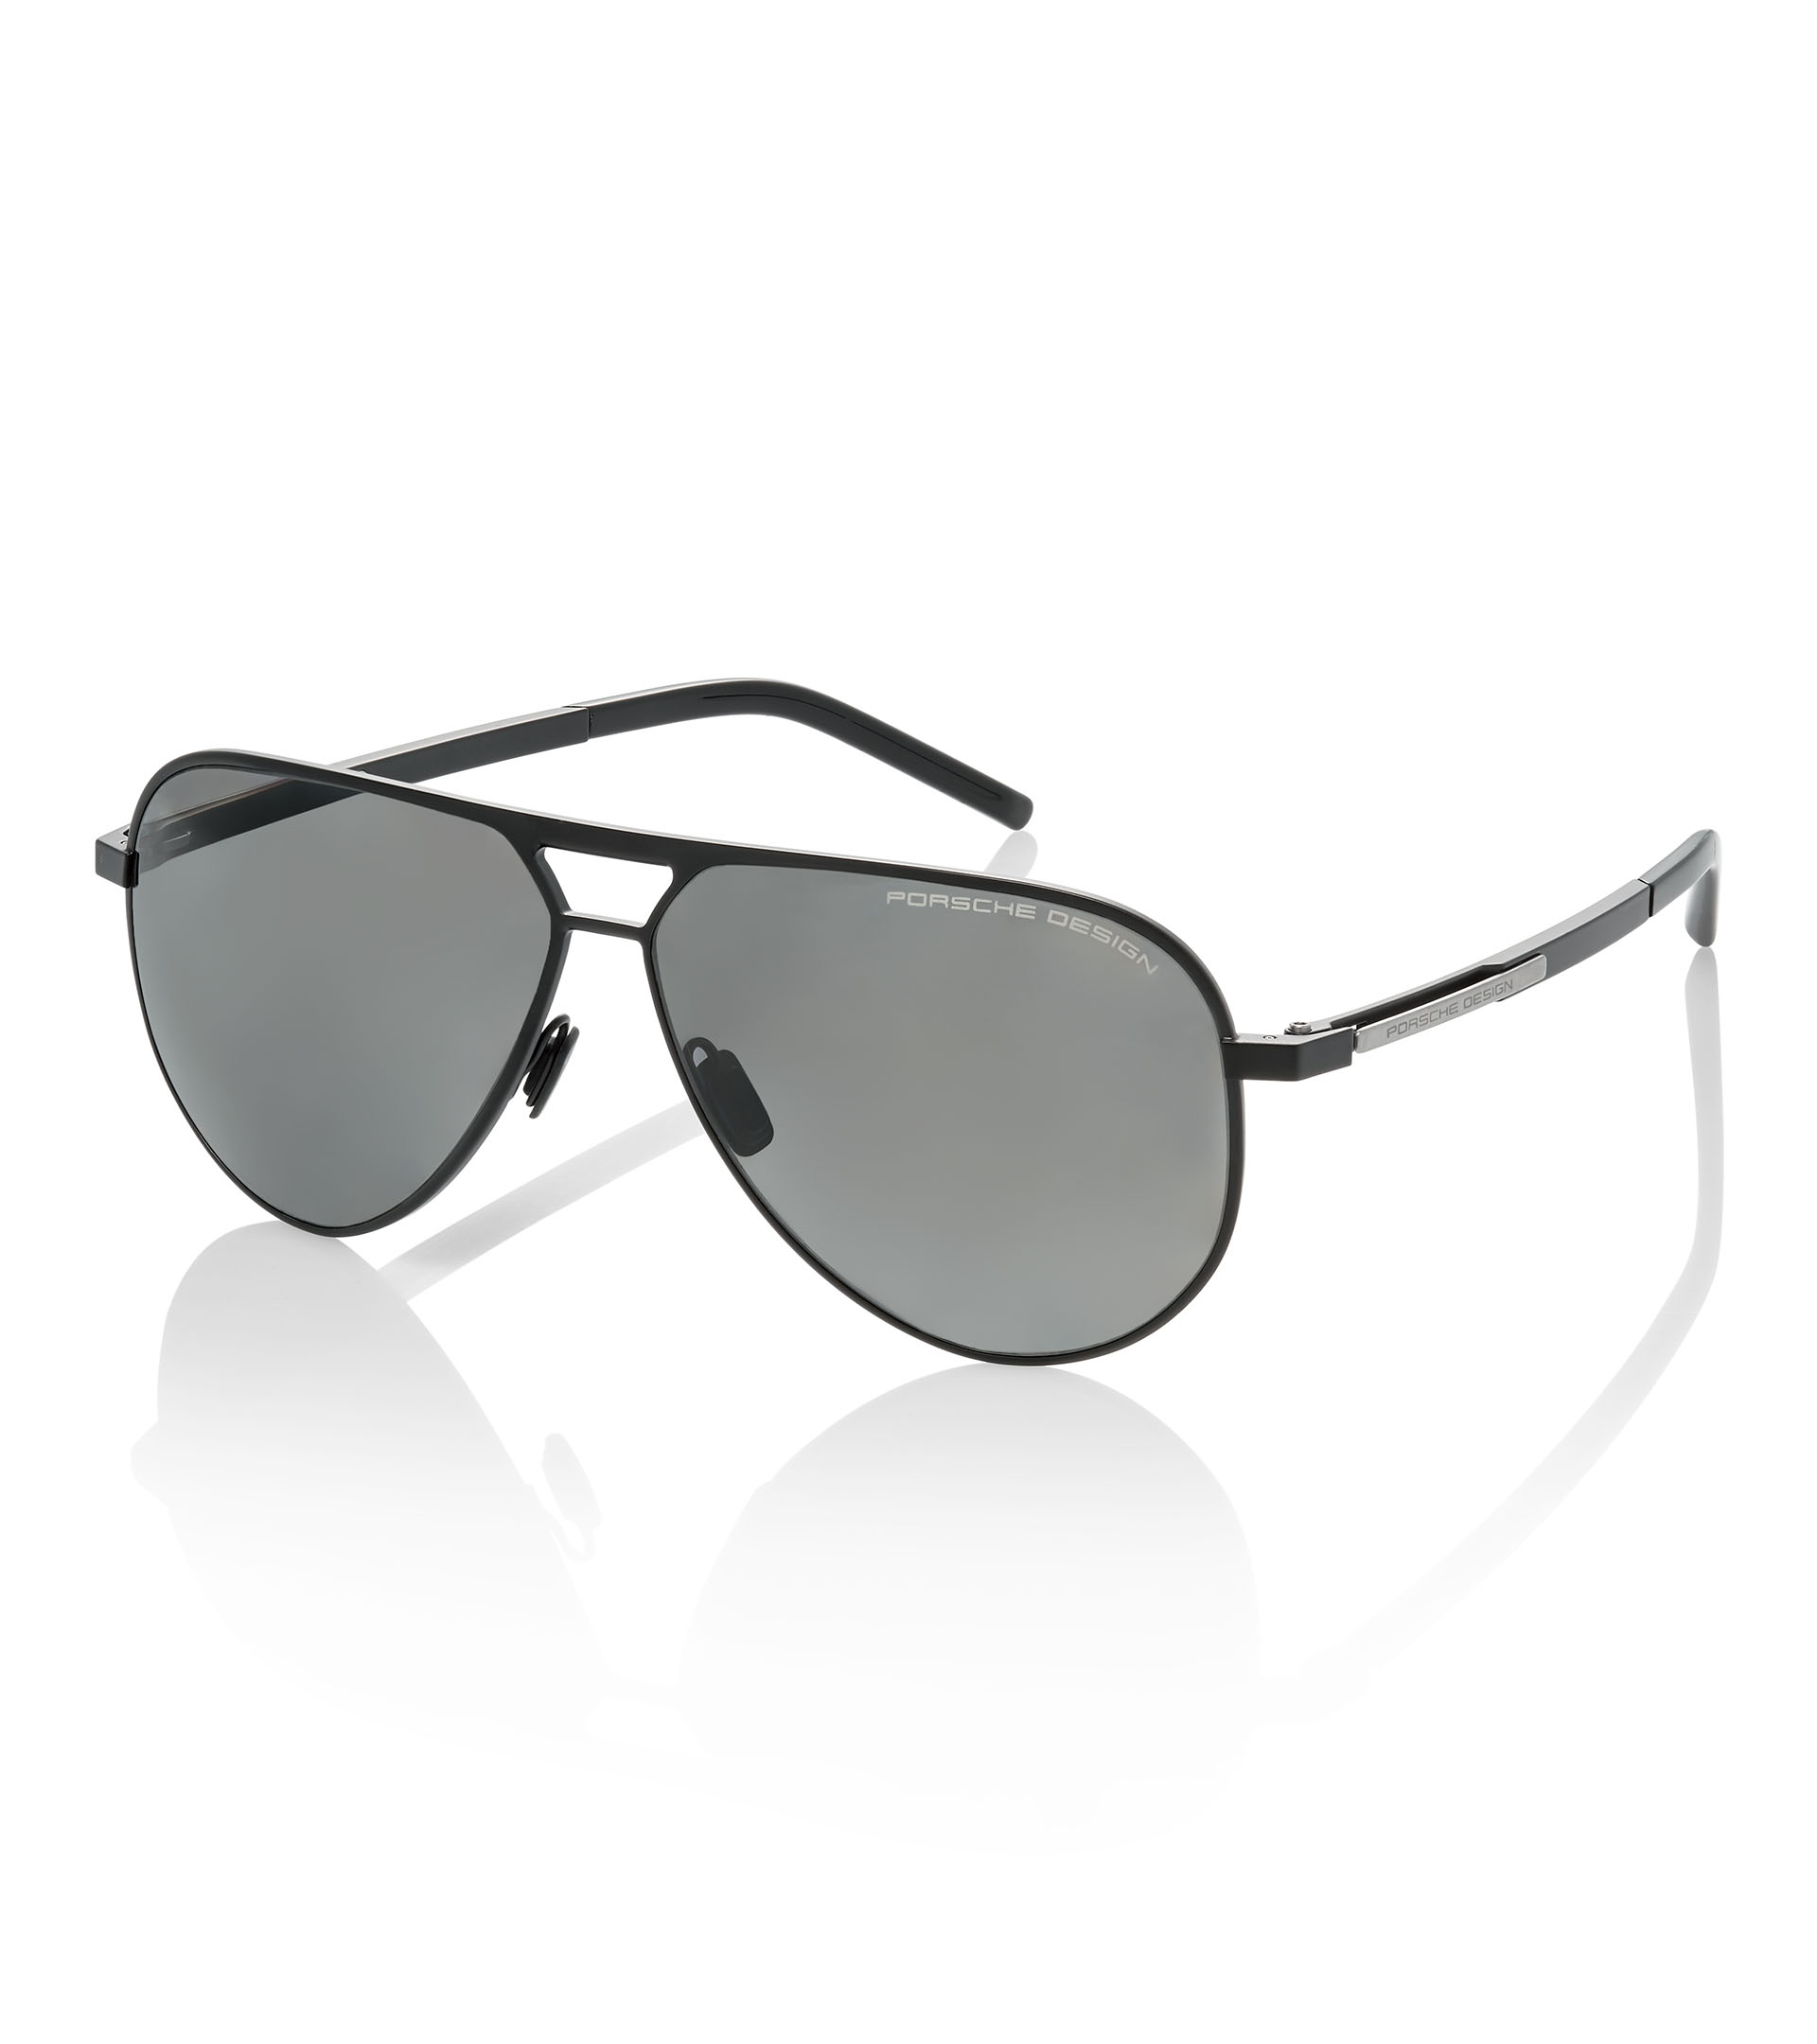 Discover 84+ images porsche design aviator sunglasses - In.thptnganamst ...